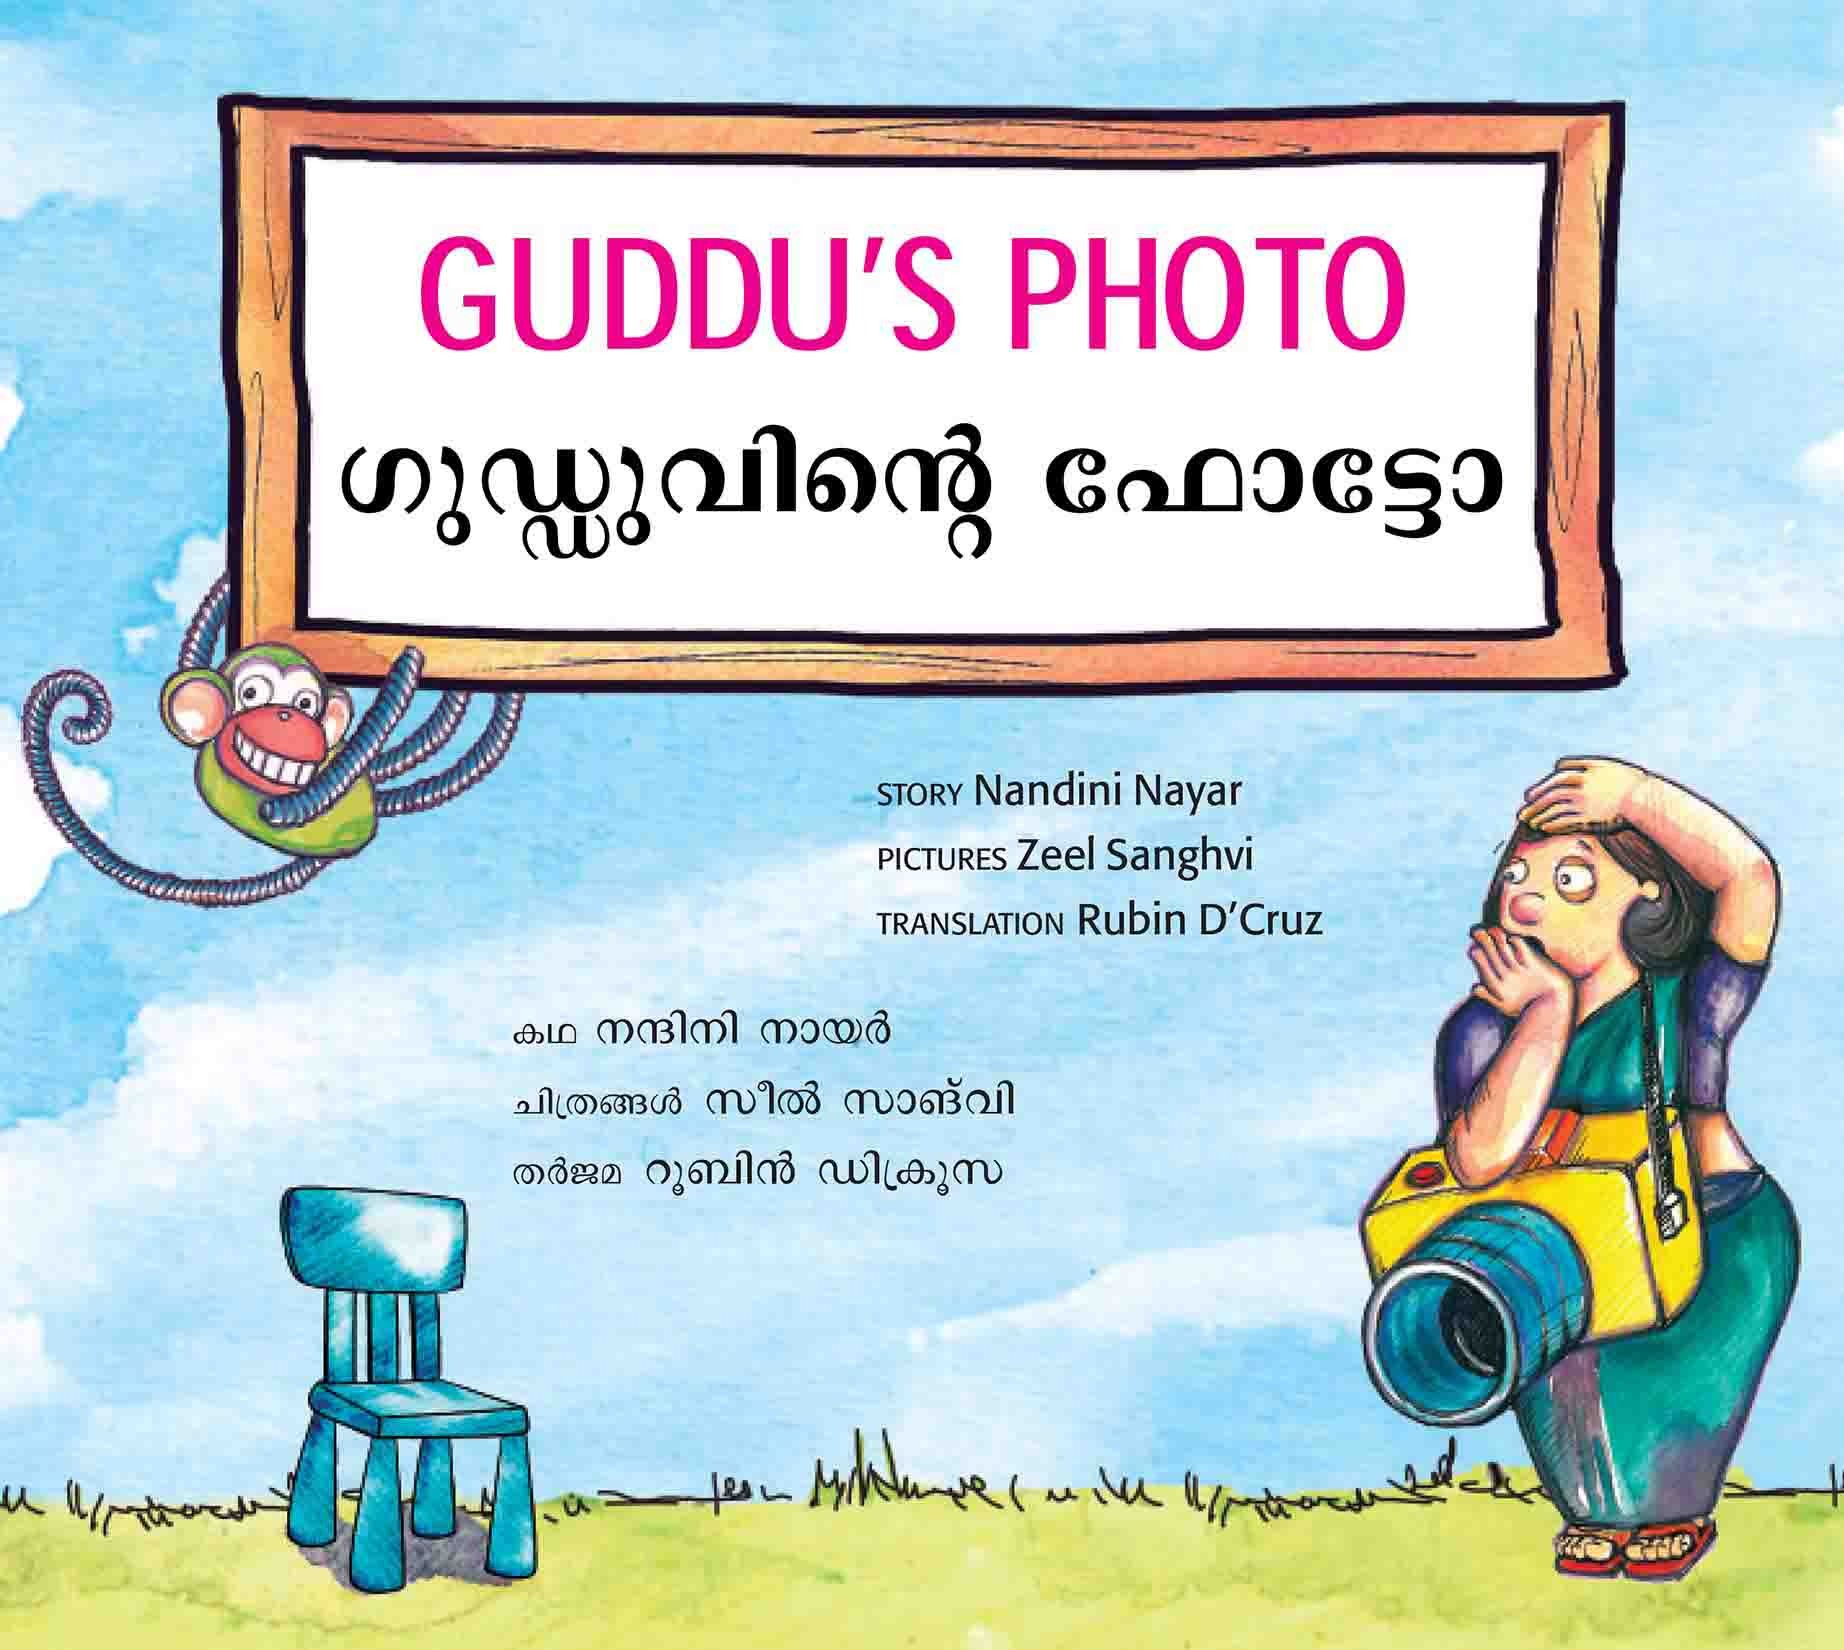 Guddu's Photo/Gudduvinde Photo (English-Malayalam)